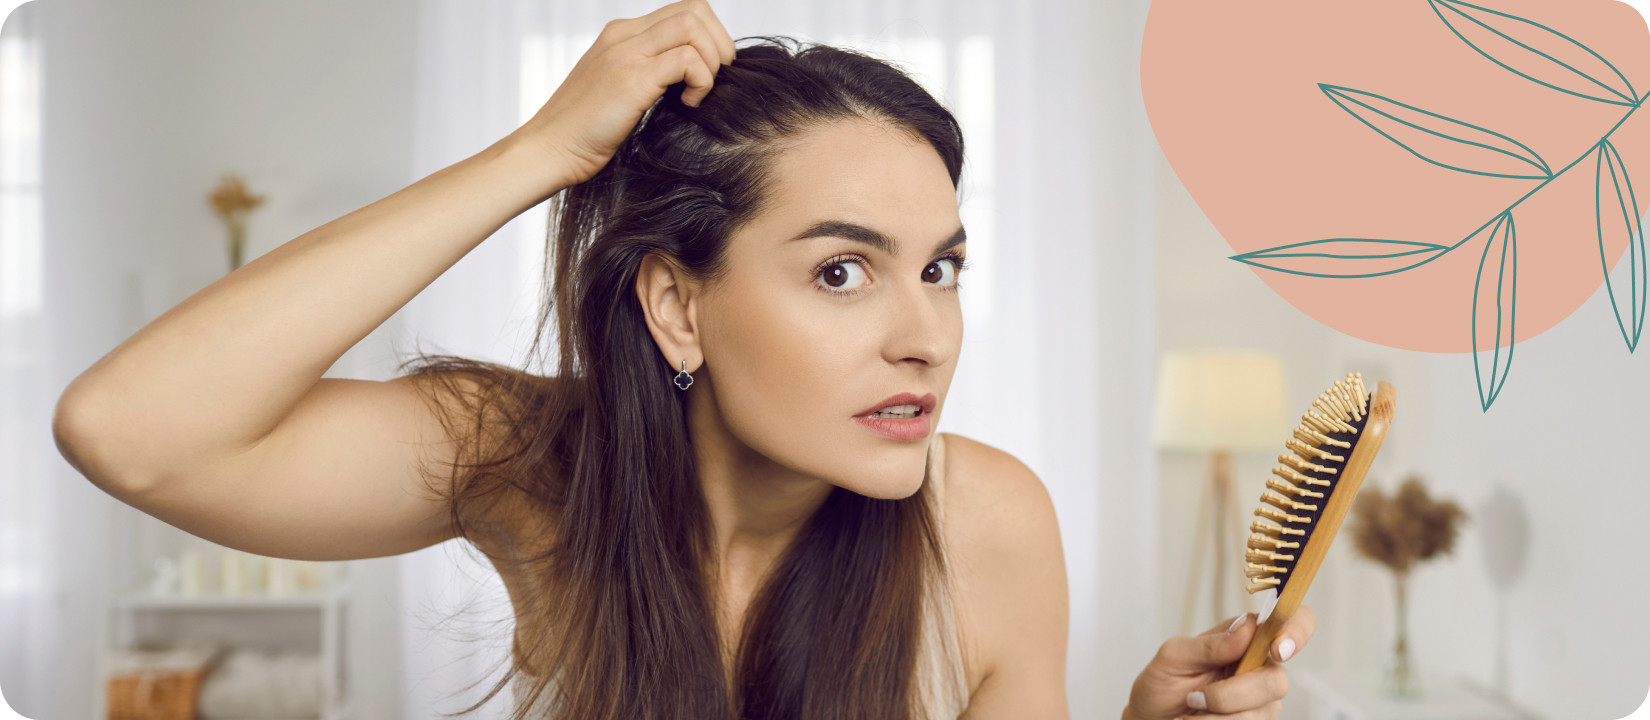 Седина волос: причины и лечение | МЦ Данимед